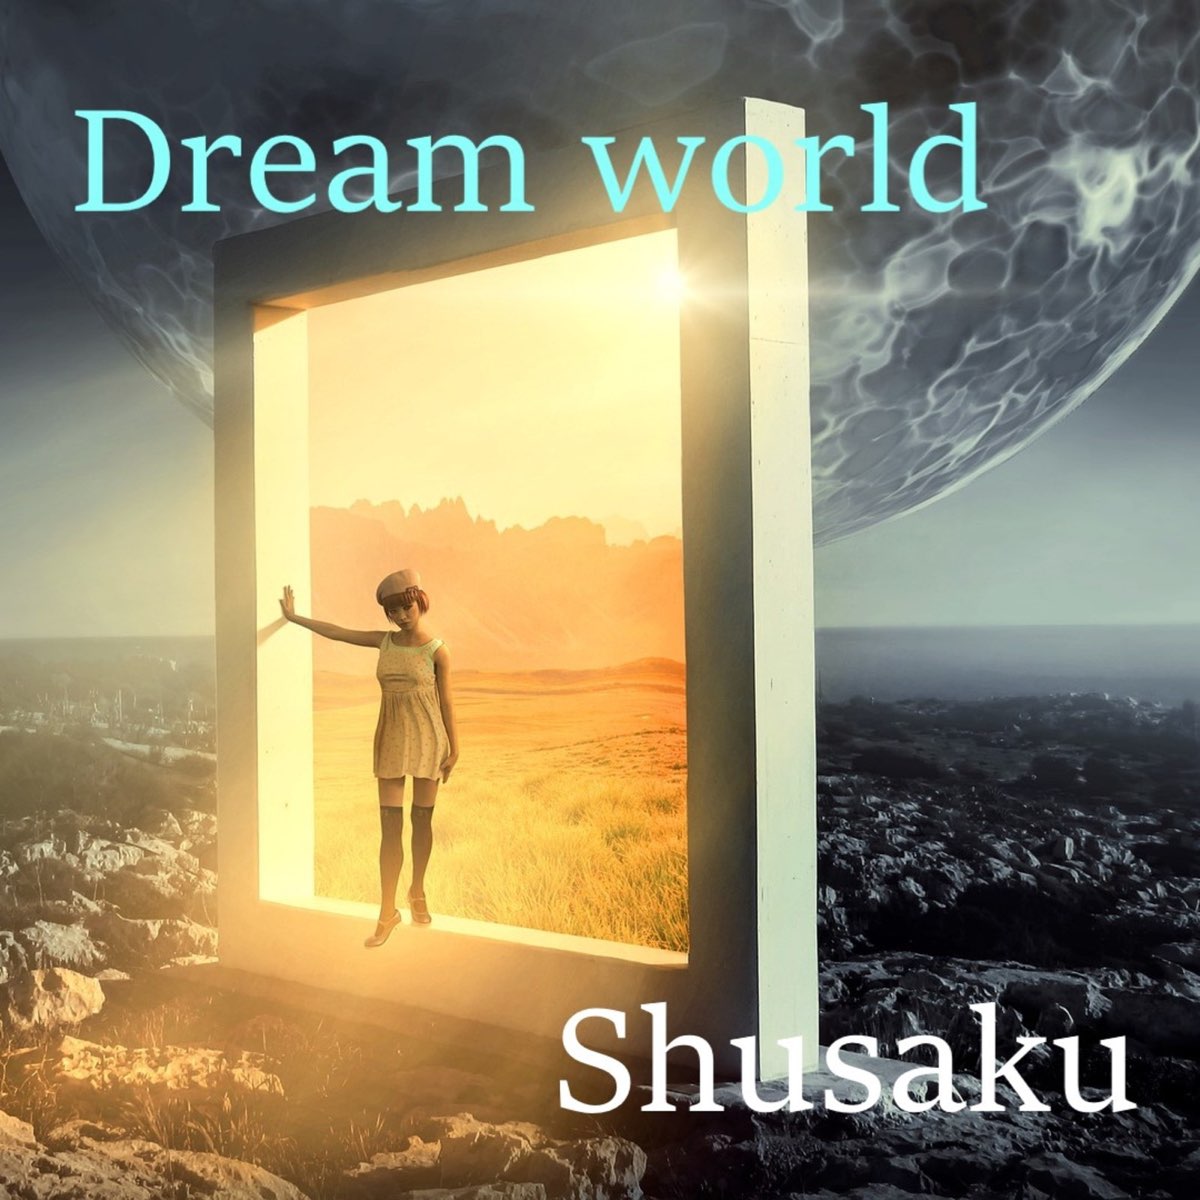 ‎Dream world - Single par Shusaku sur Apple Music